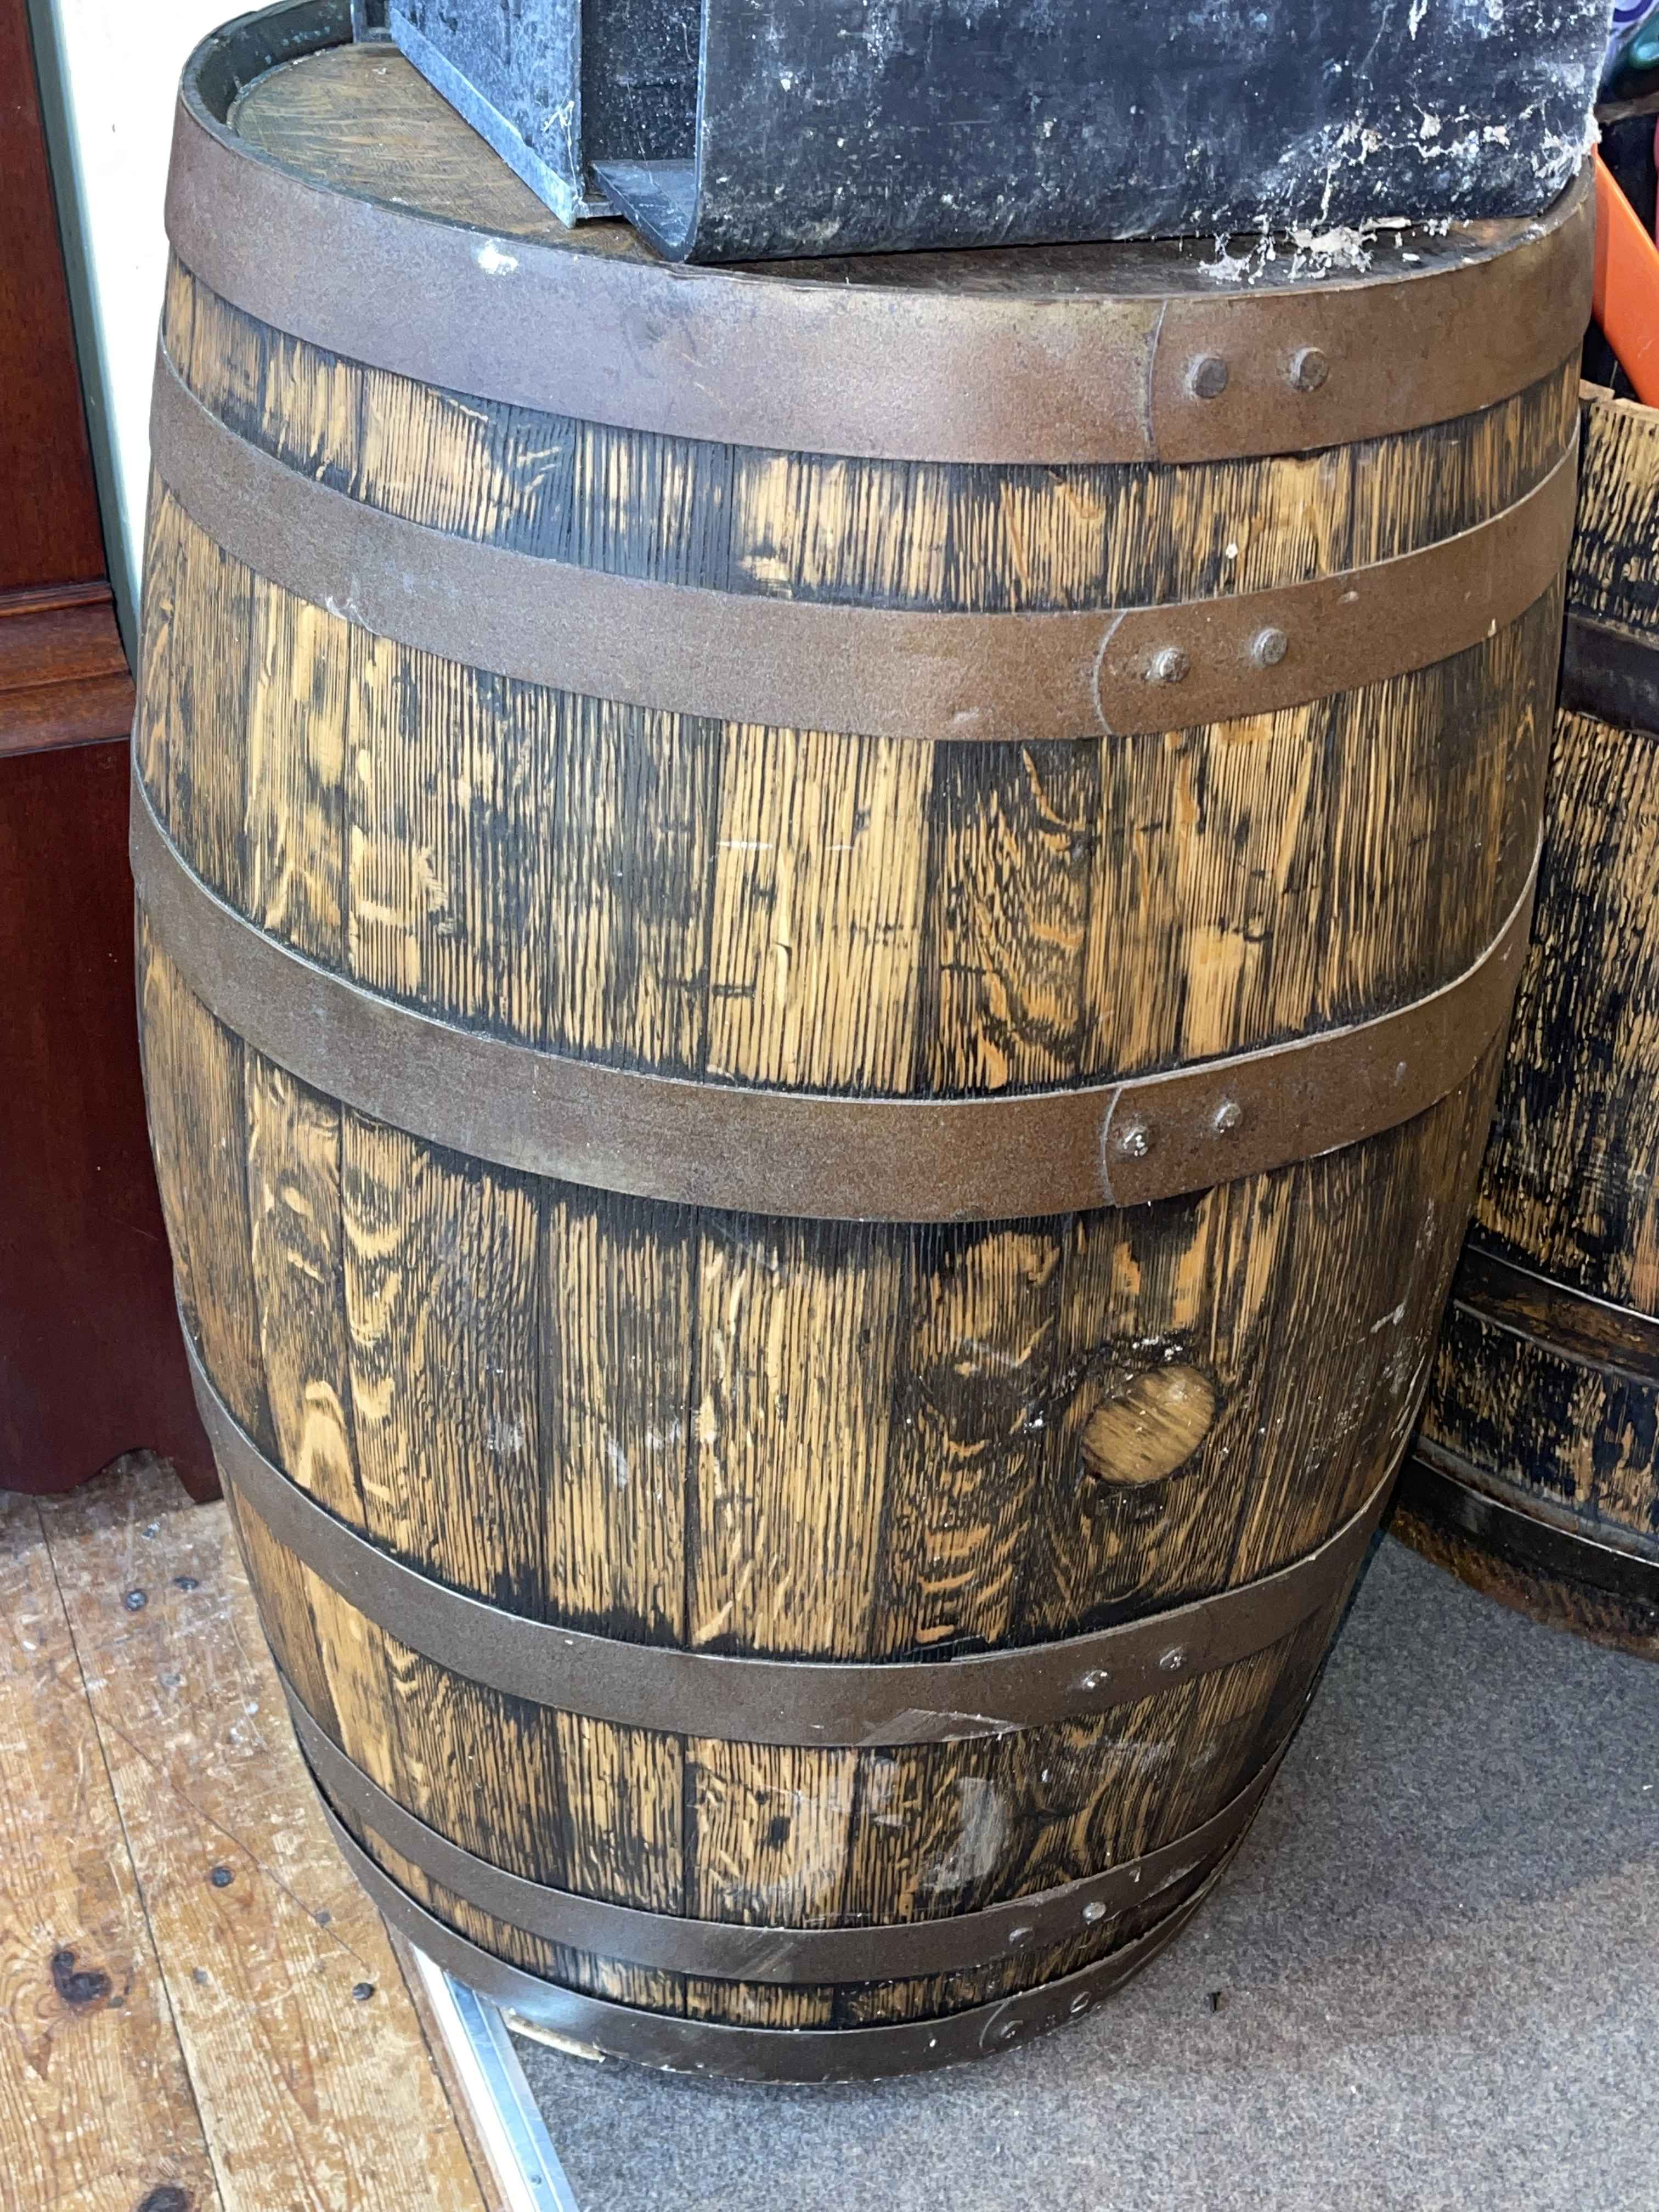 Large oak and metal coopered barrel.